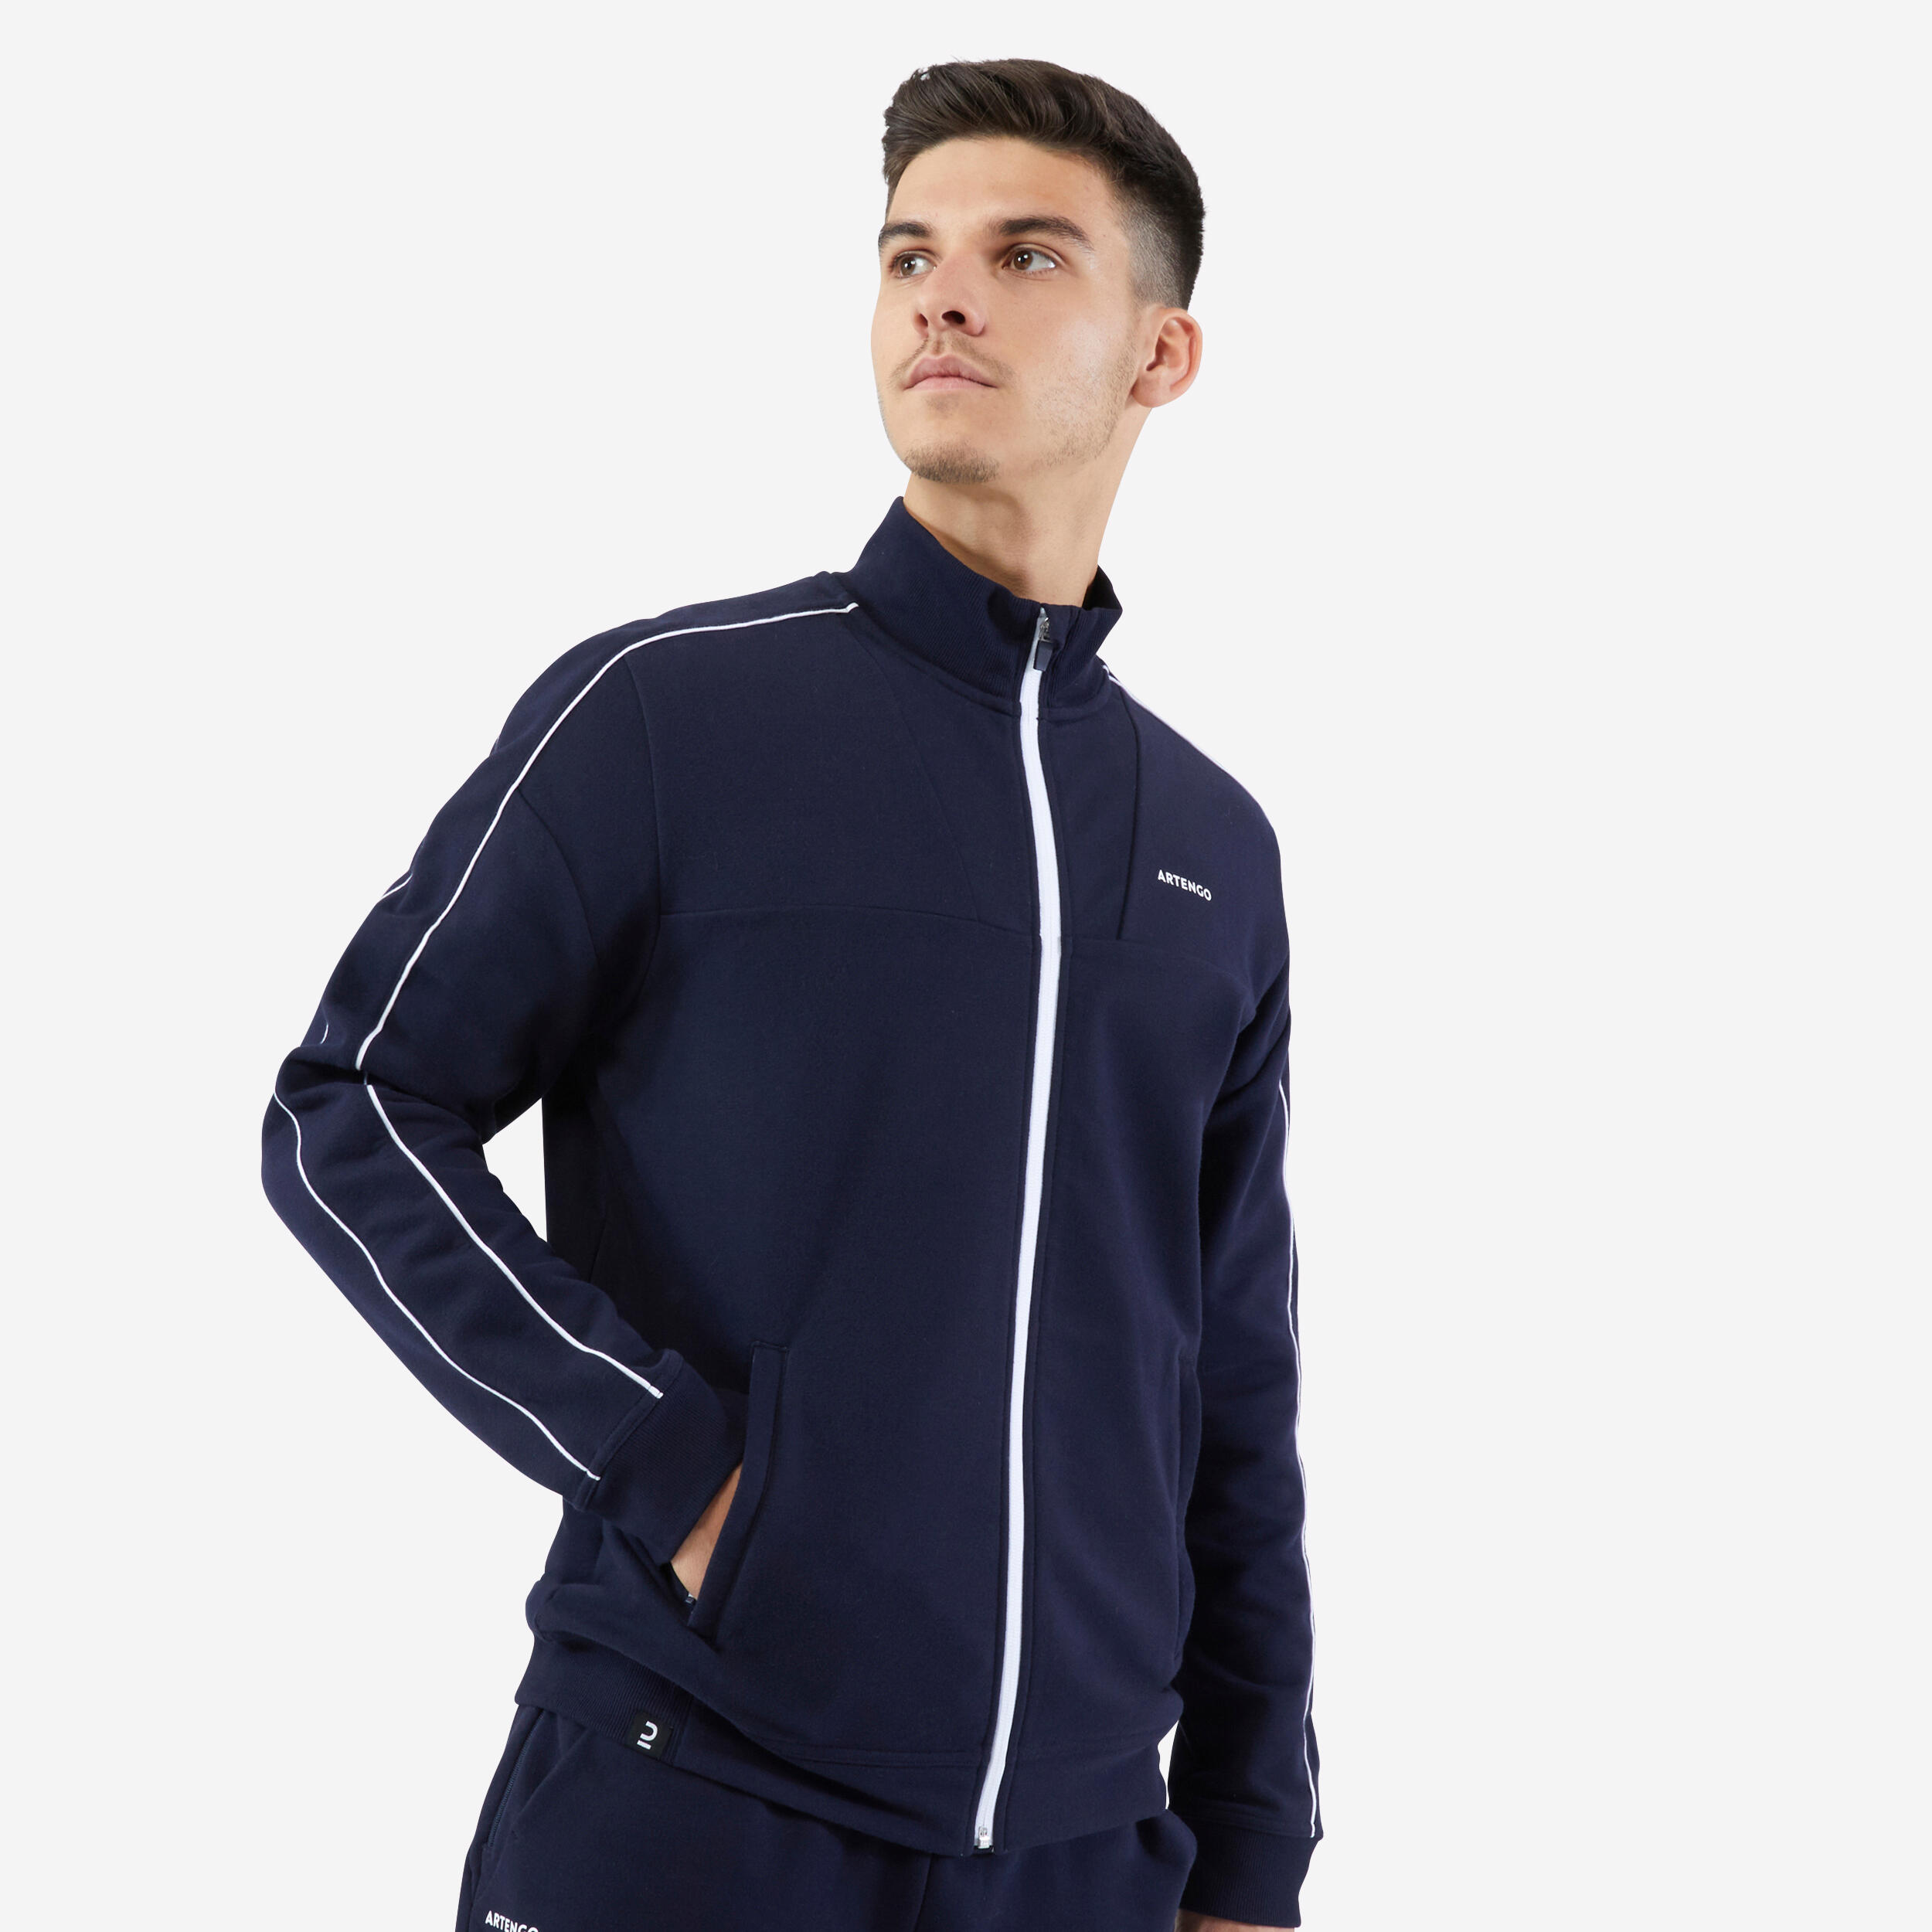 Men's Tennis Jacket Soft - Navy 1/4